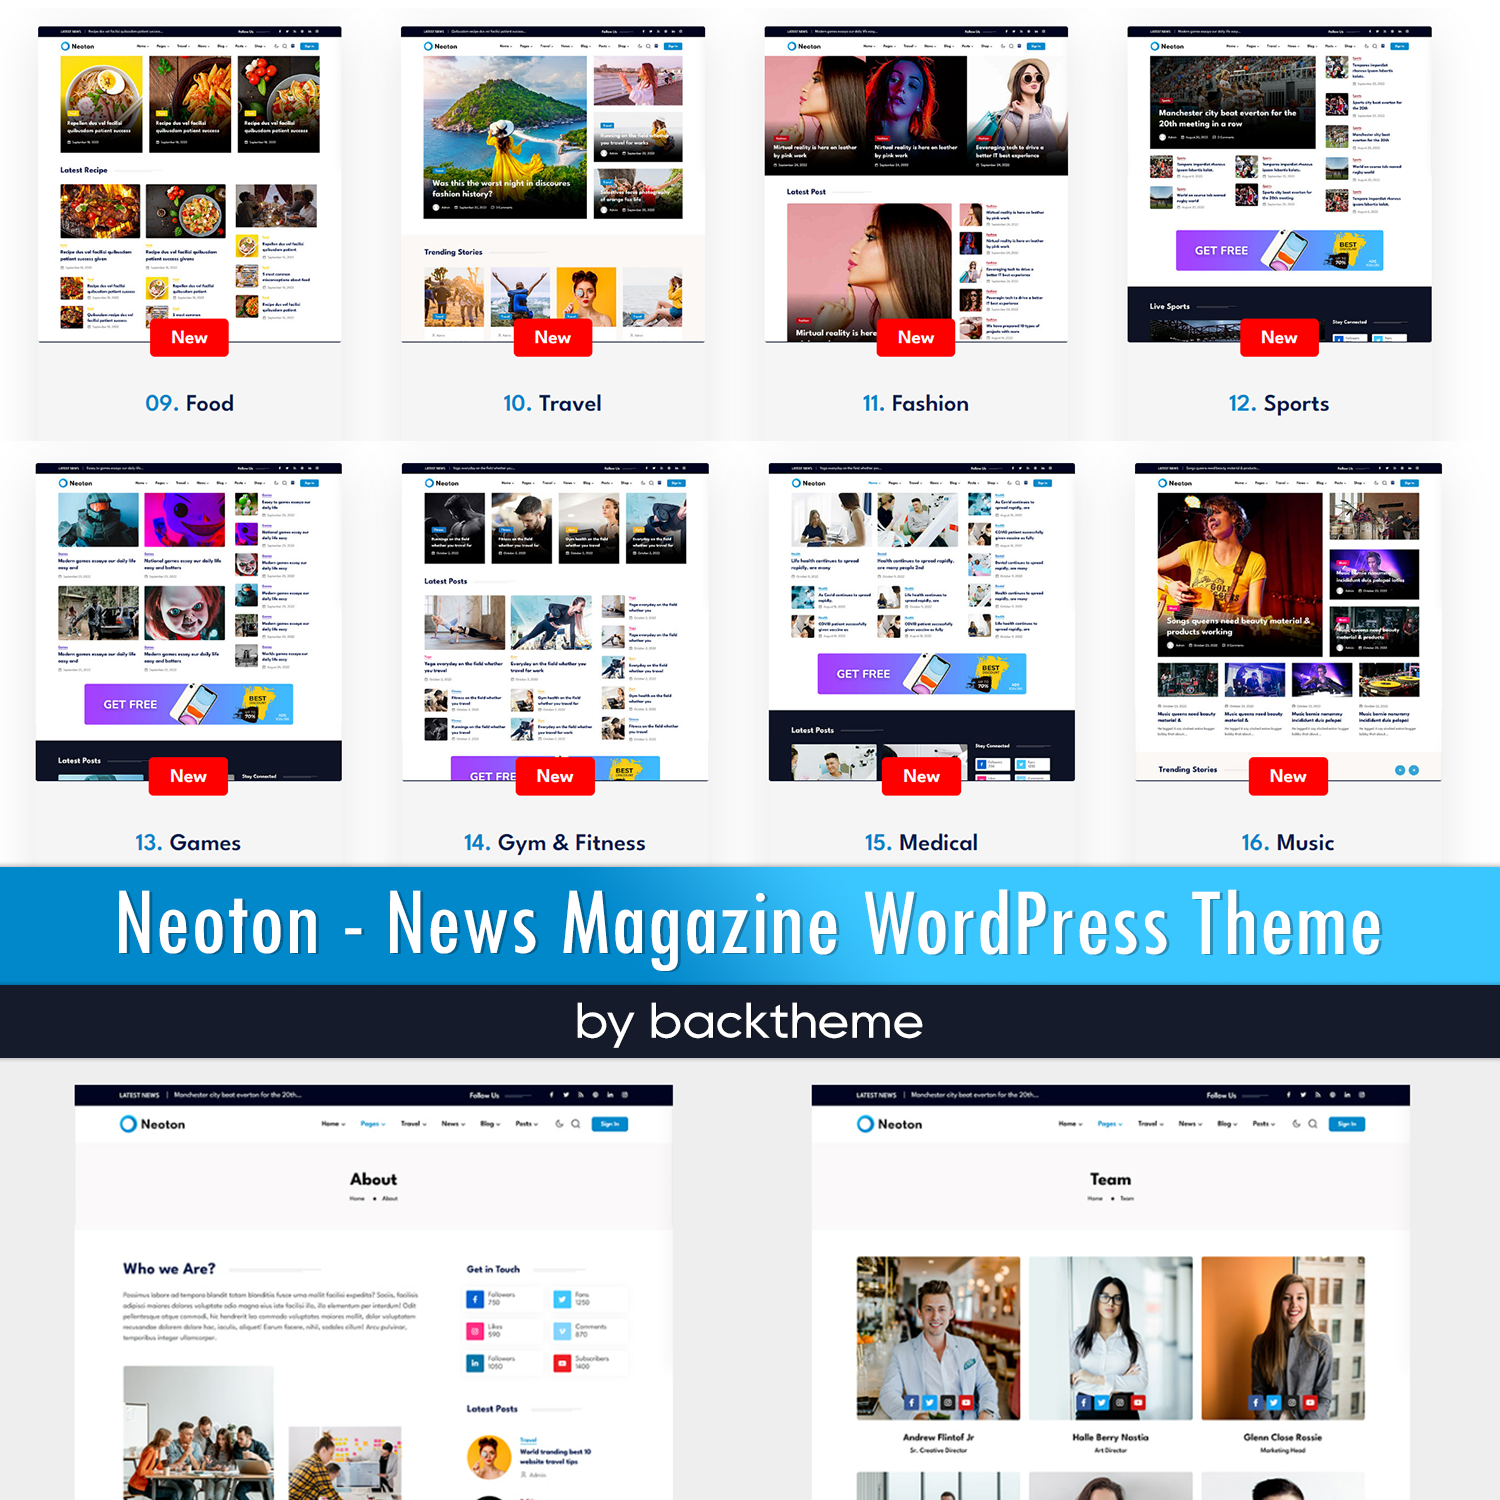 Images with neoton news magazine wordpress theme.